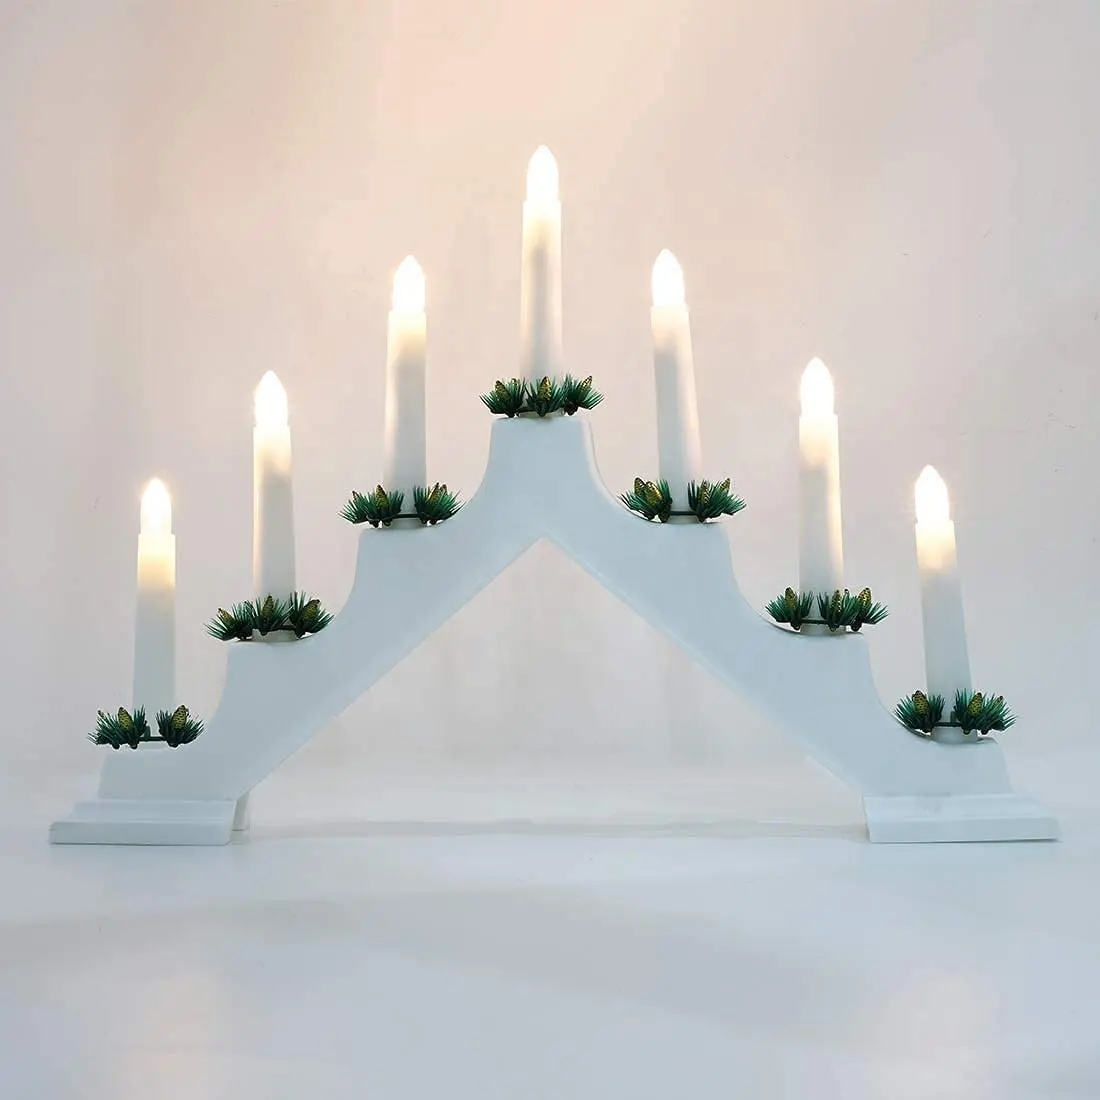 7 LED Traditional Christmas Plastic Candle Bridge Arch Window Decoration Light Xmas Ornament